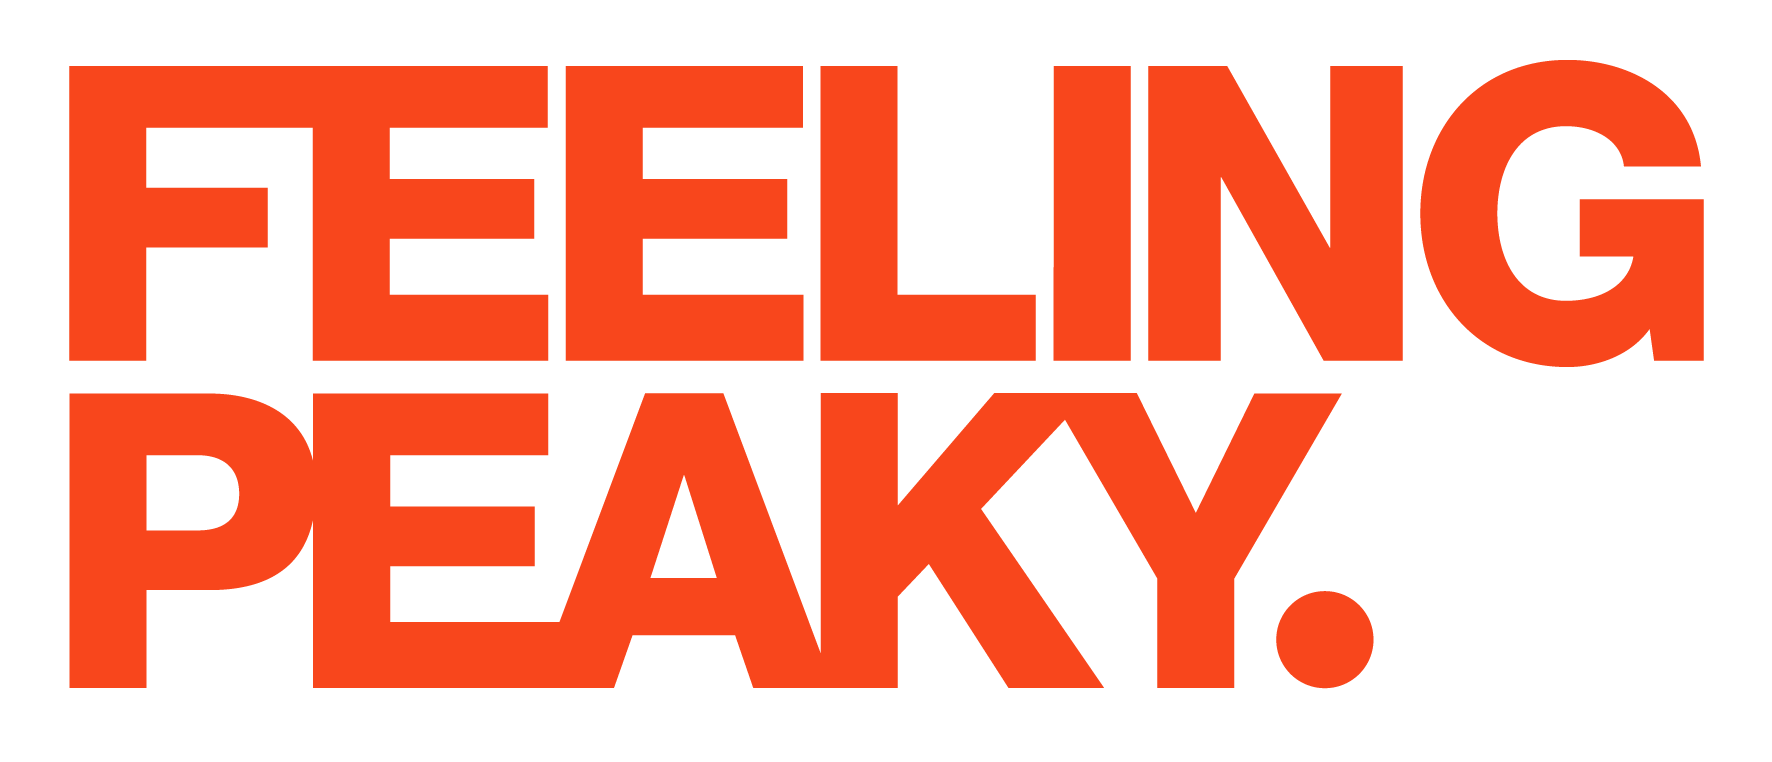 Feelingpeaky - Design & Marketing Agency London